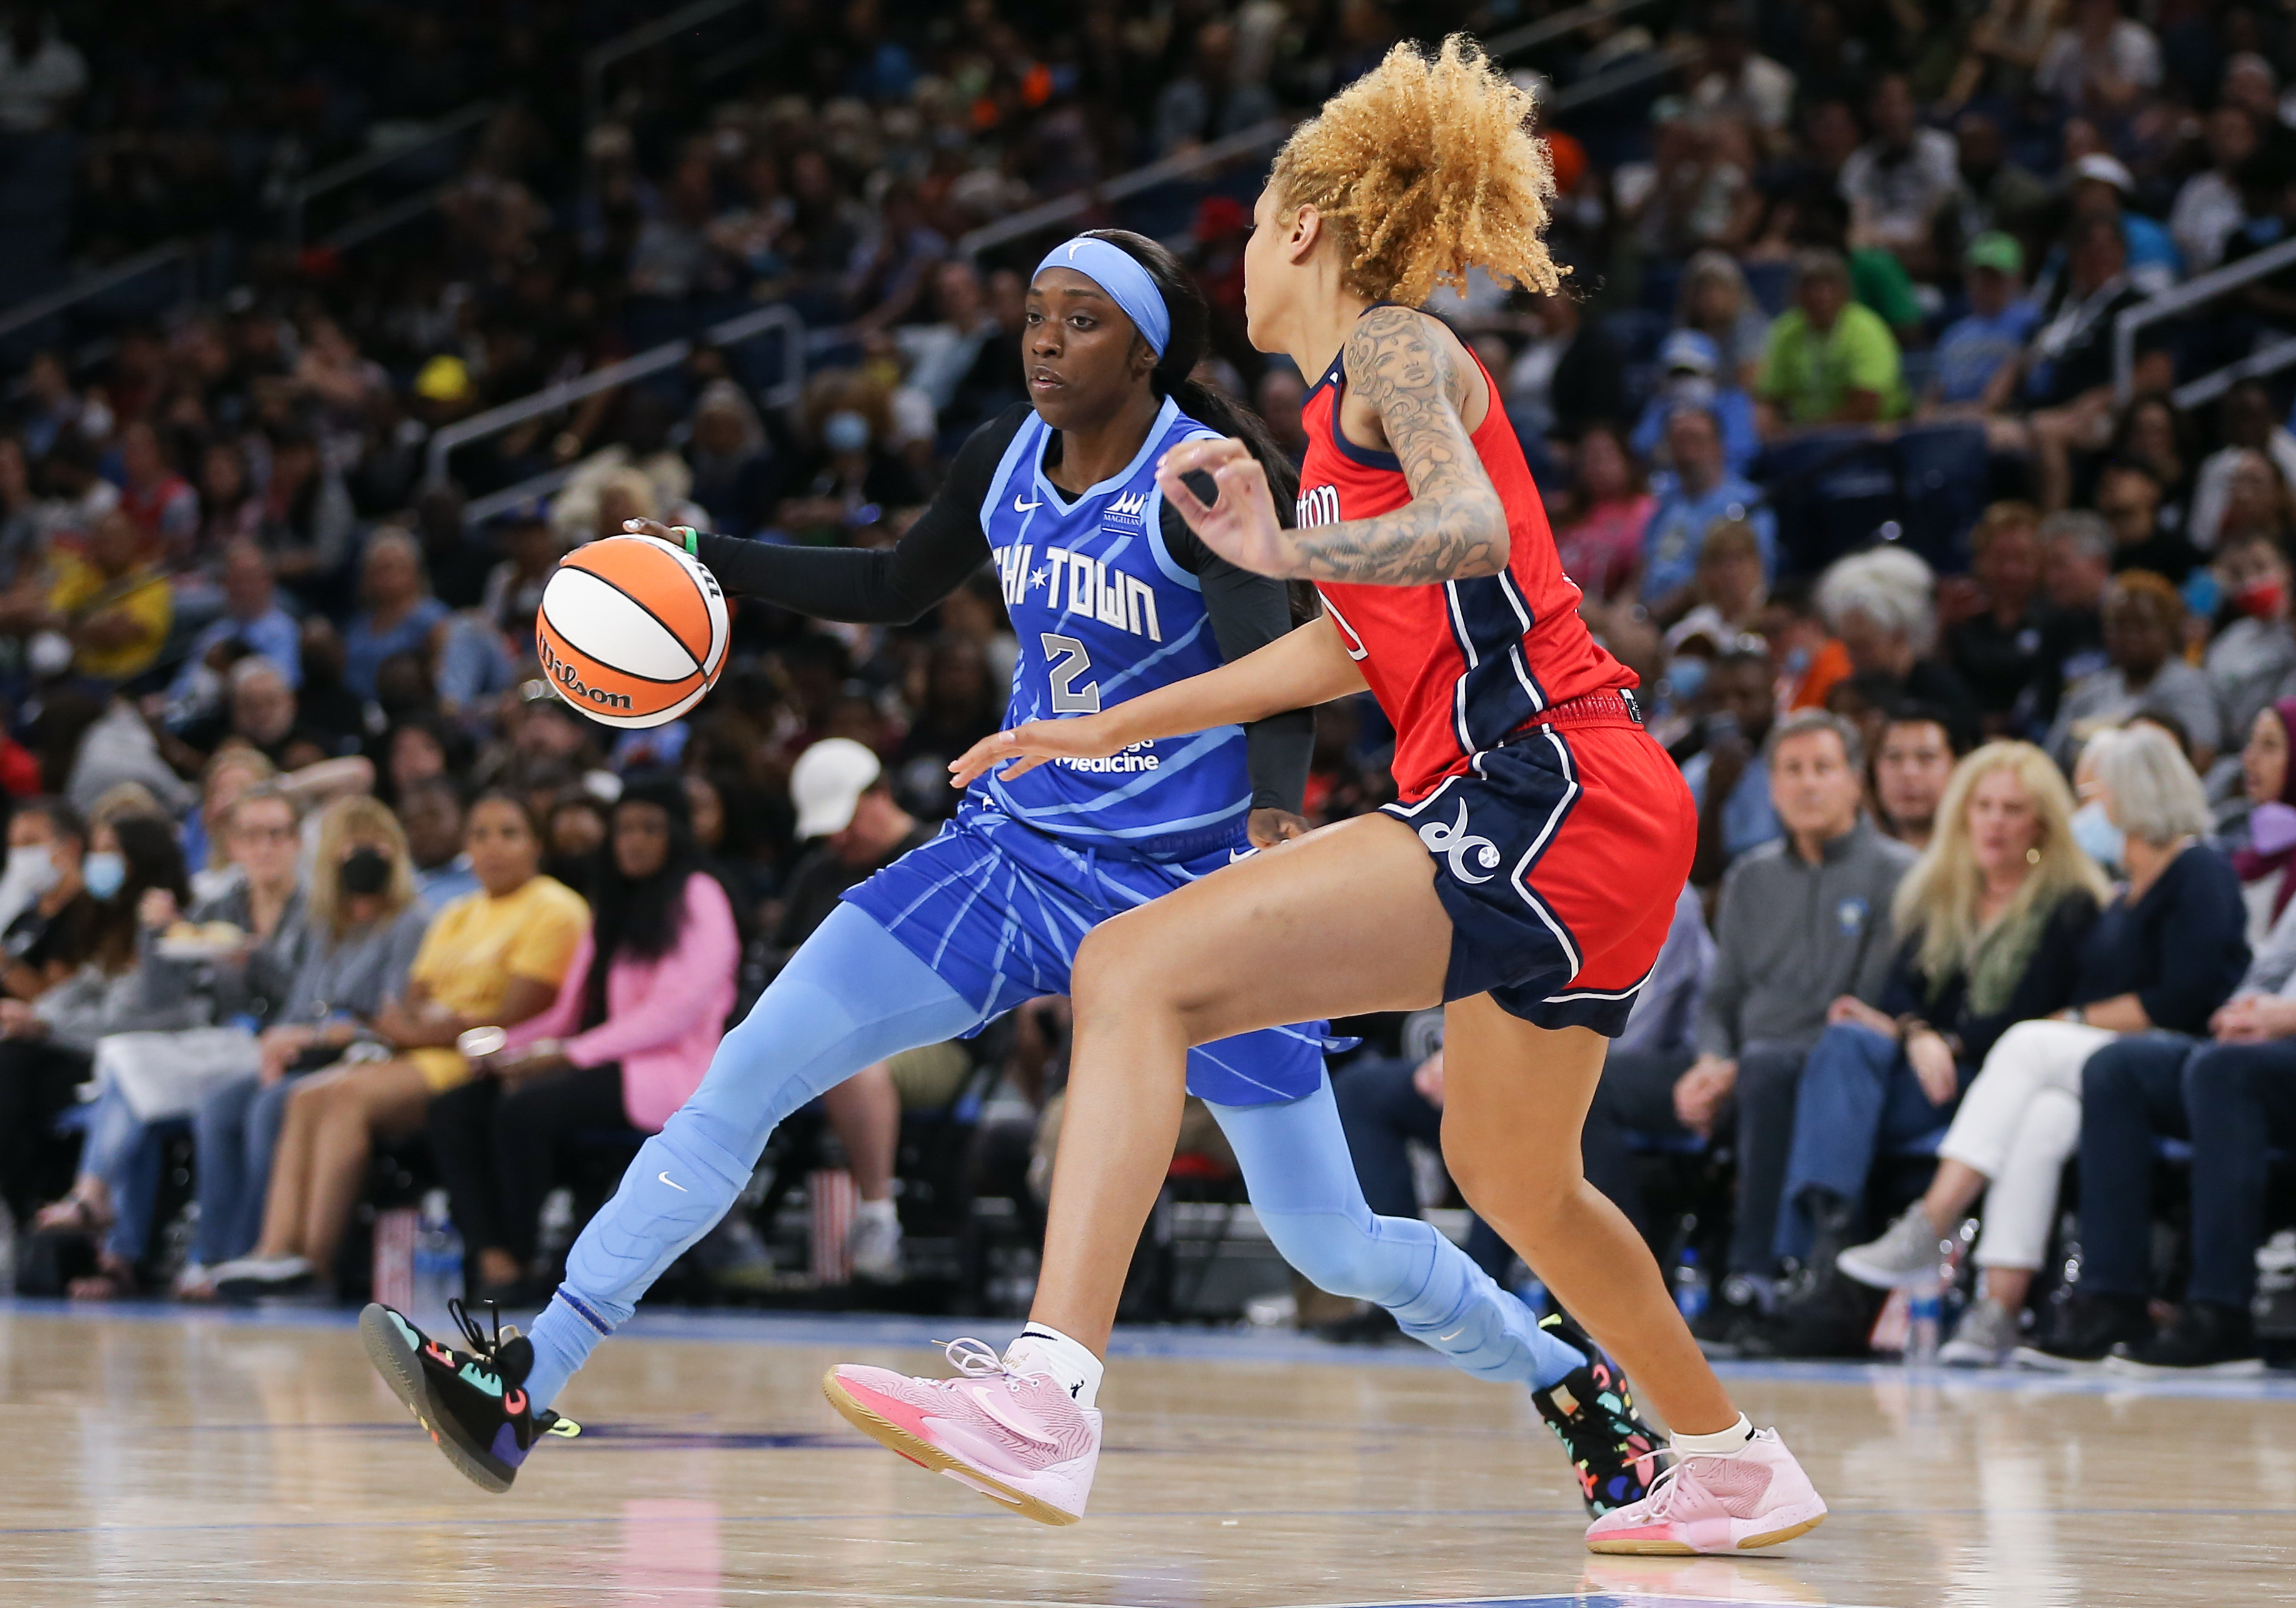 WNBA: JUN 05 Washington Mystics at Chicago Sky